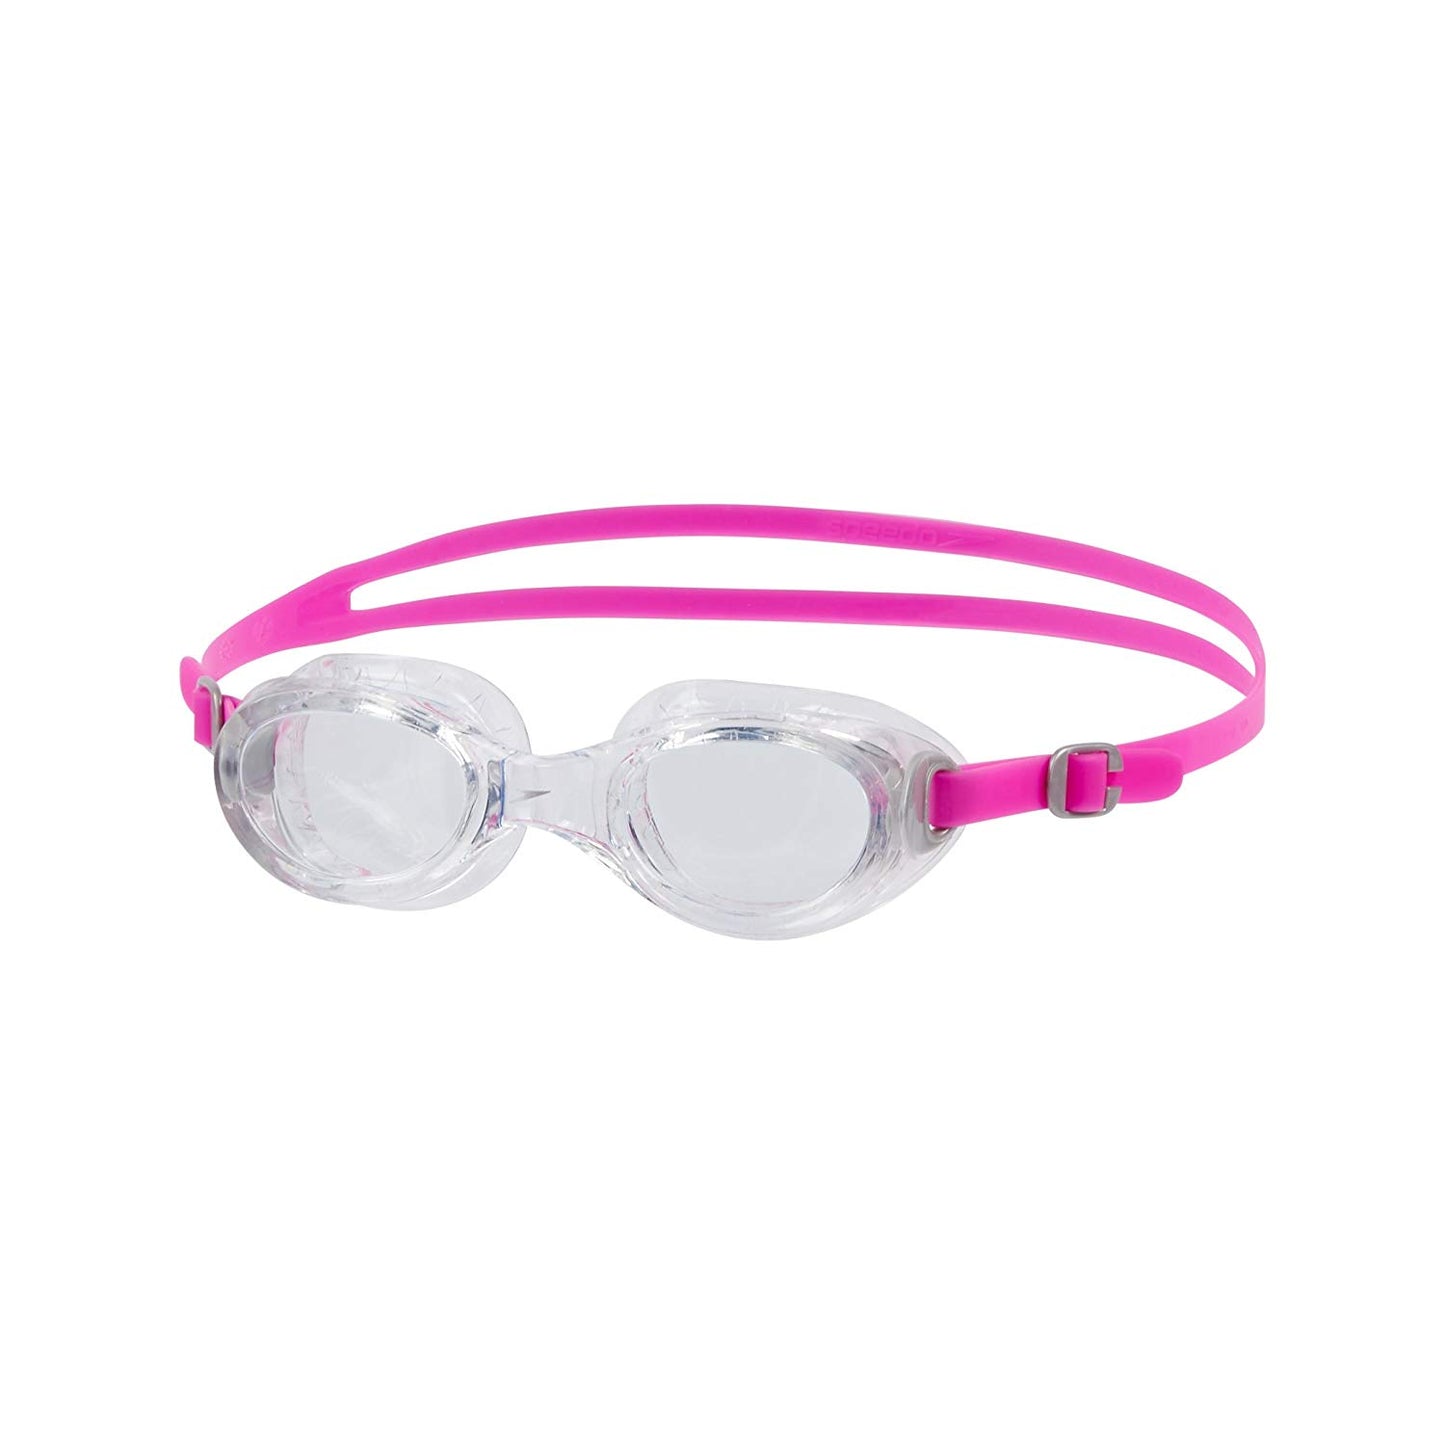 Speedo Female-Adult Futura Classic Female Goggles (Pink/Clear) - Best Price online Prokicksports.com